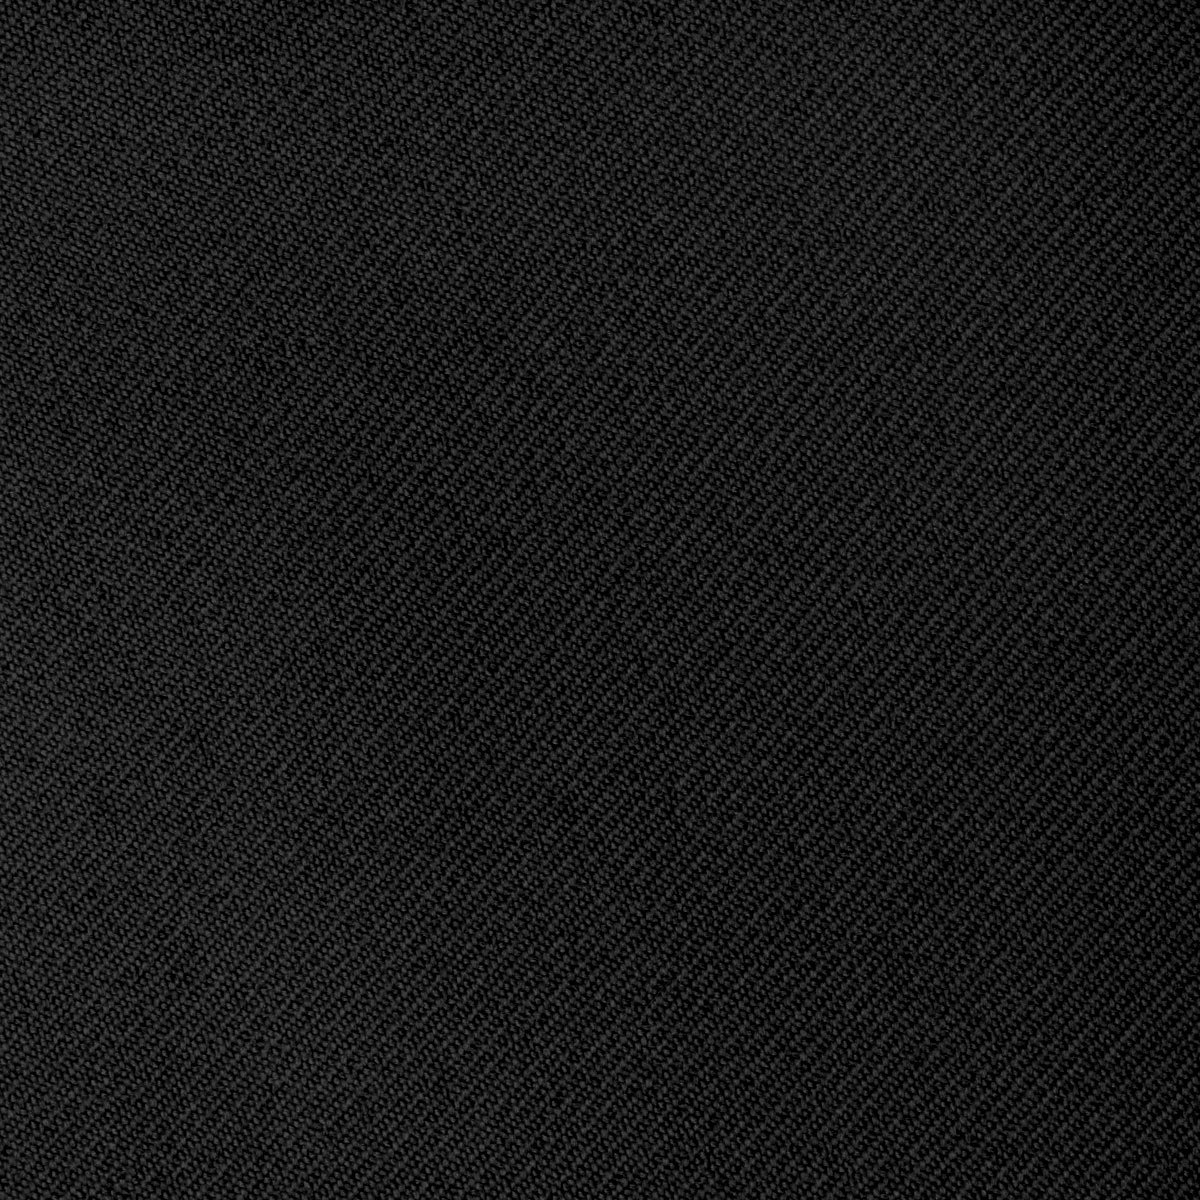 Sew-In Trouser Hook & Eyes - B. Black & Sons Fabrics